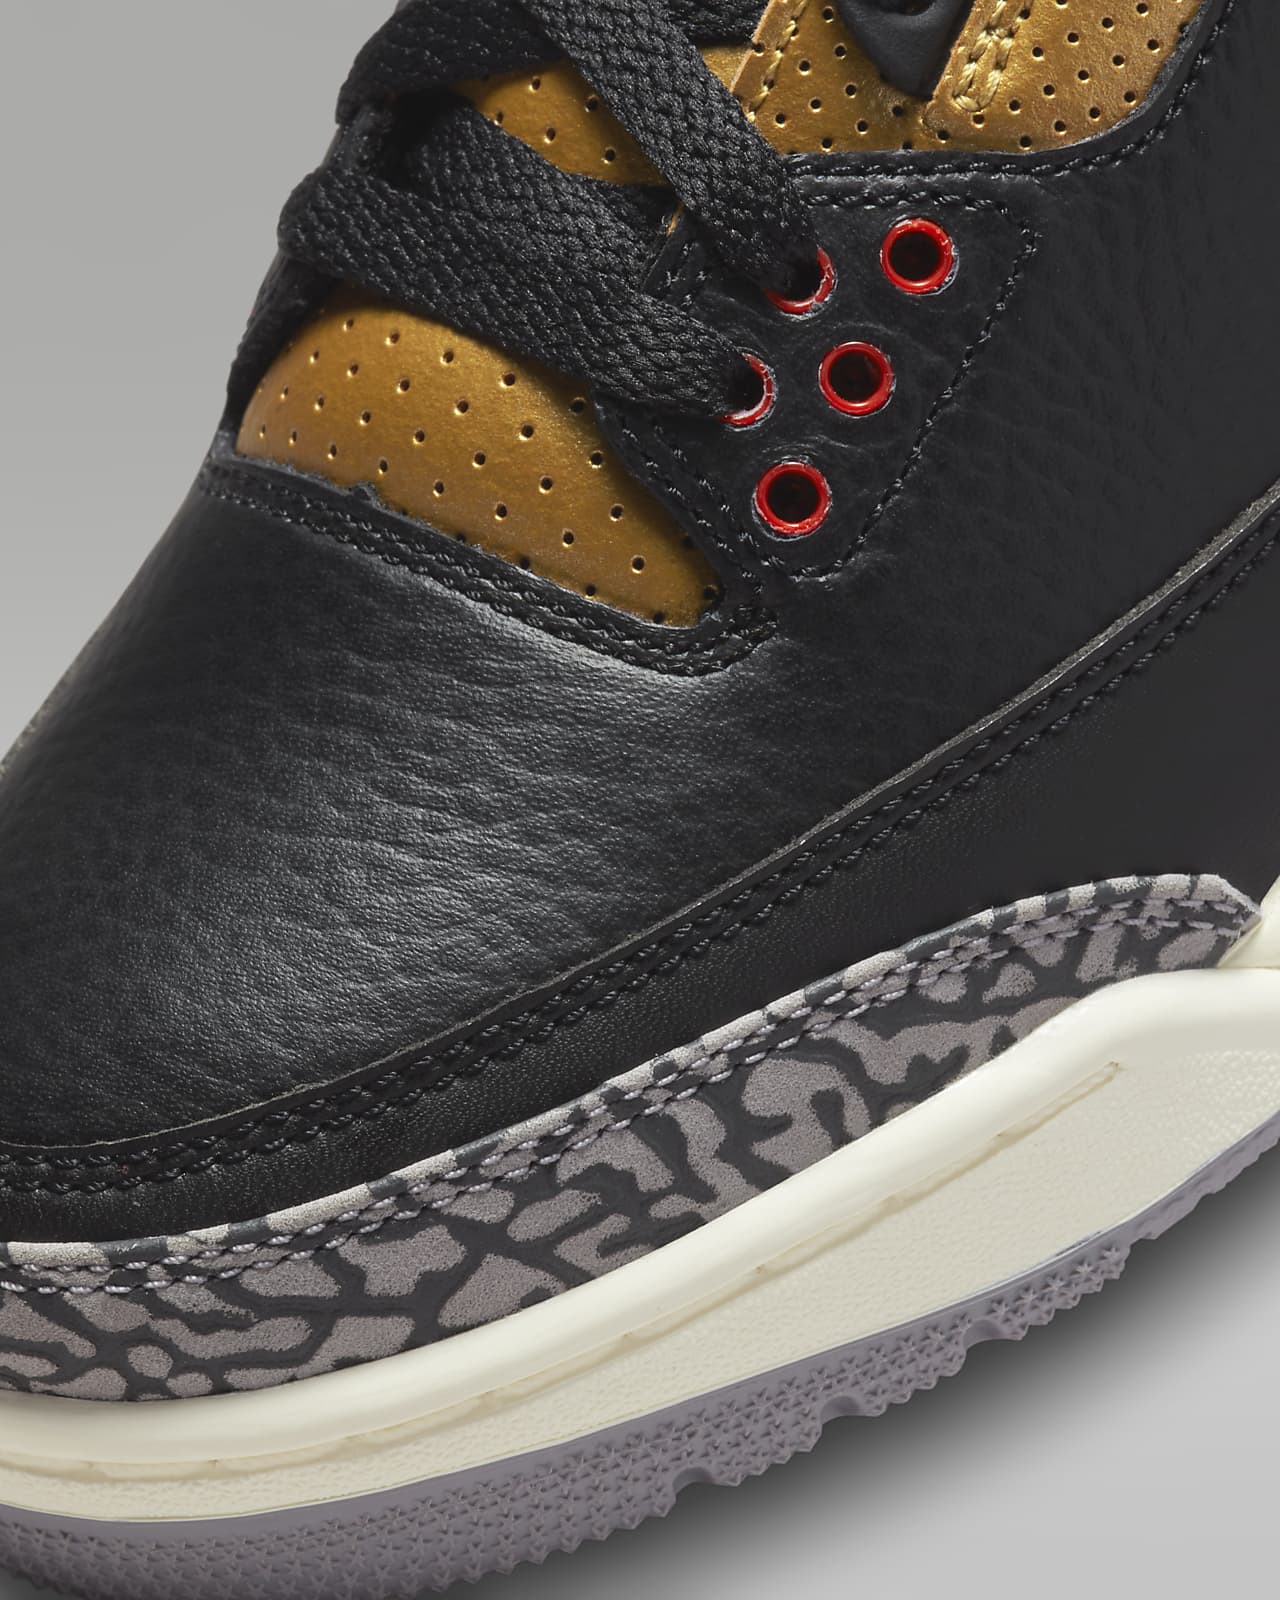 Air Jordan 3 Retro Women's Shoes. Nike LU